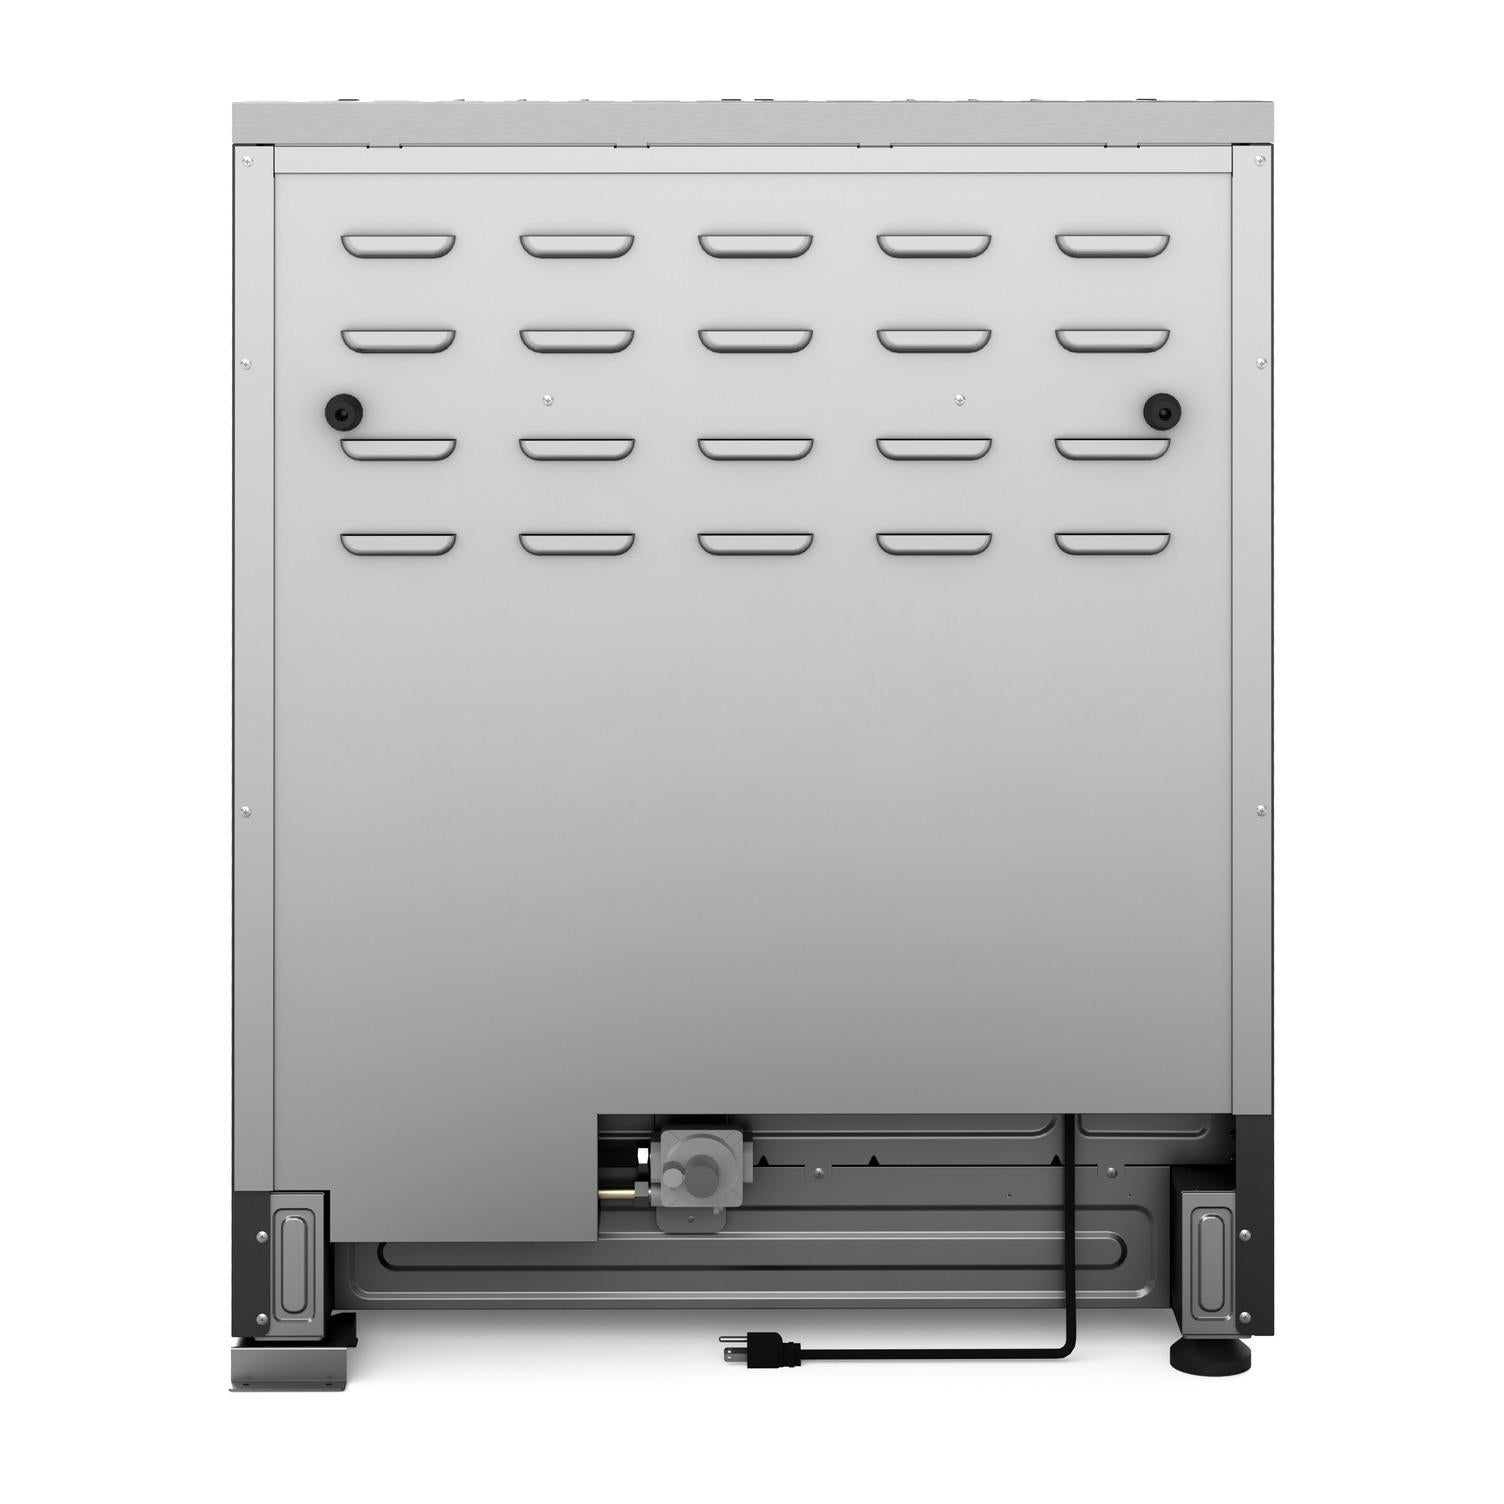 Thor Kitchen 30-inch Contemporary Professional Gas Range - Arg30/arg30lp - Liquid Propane